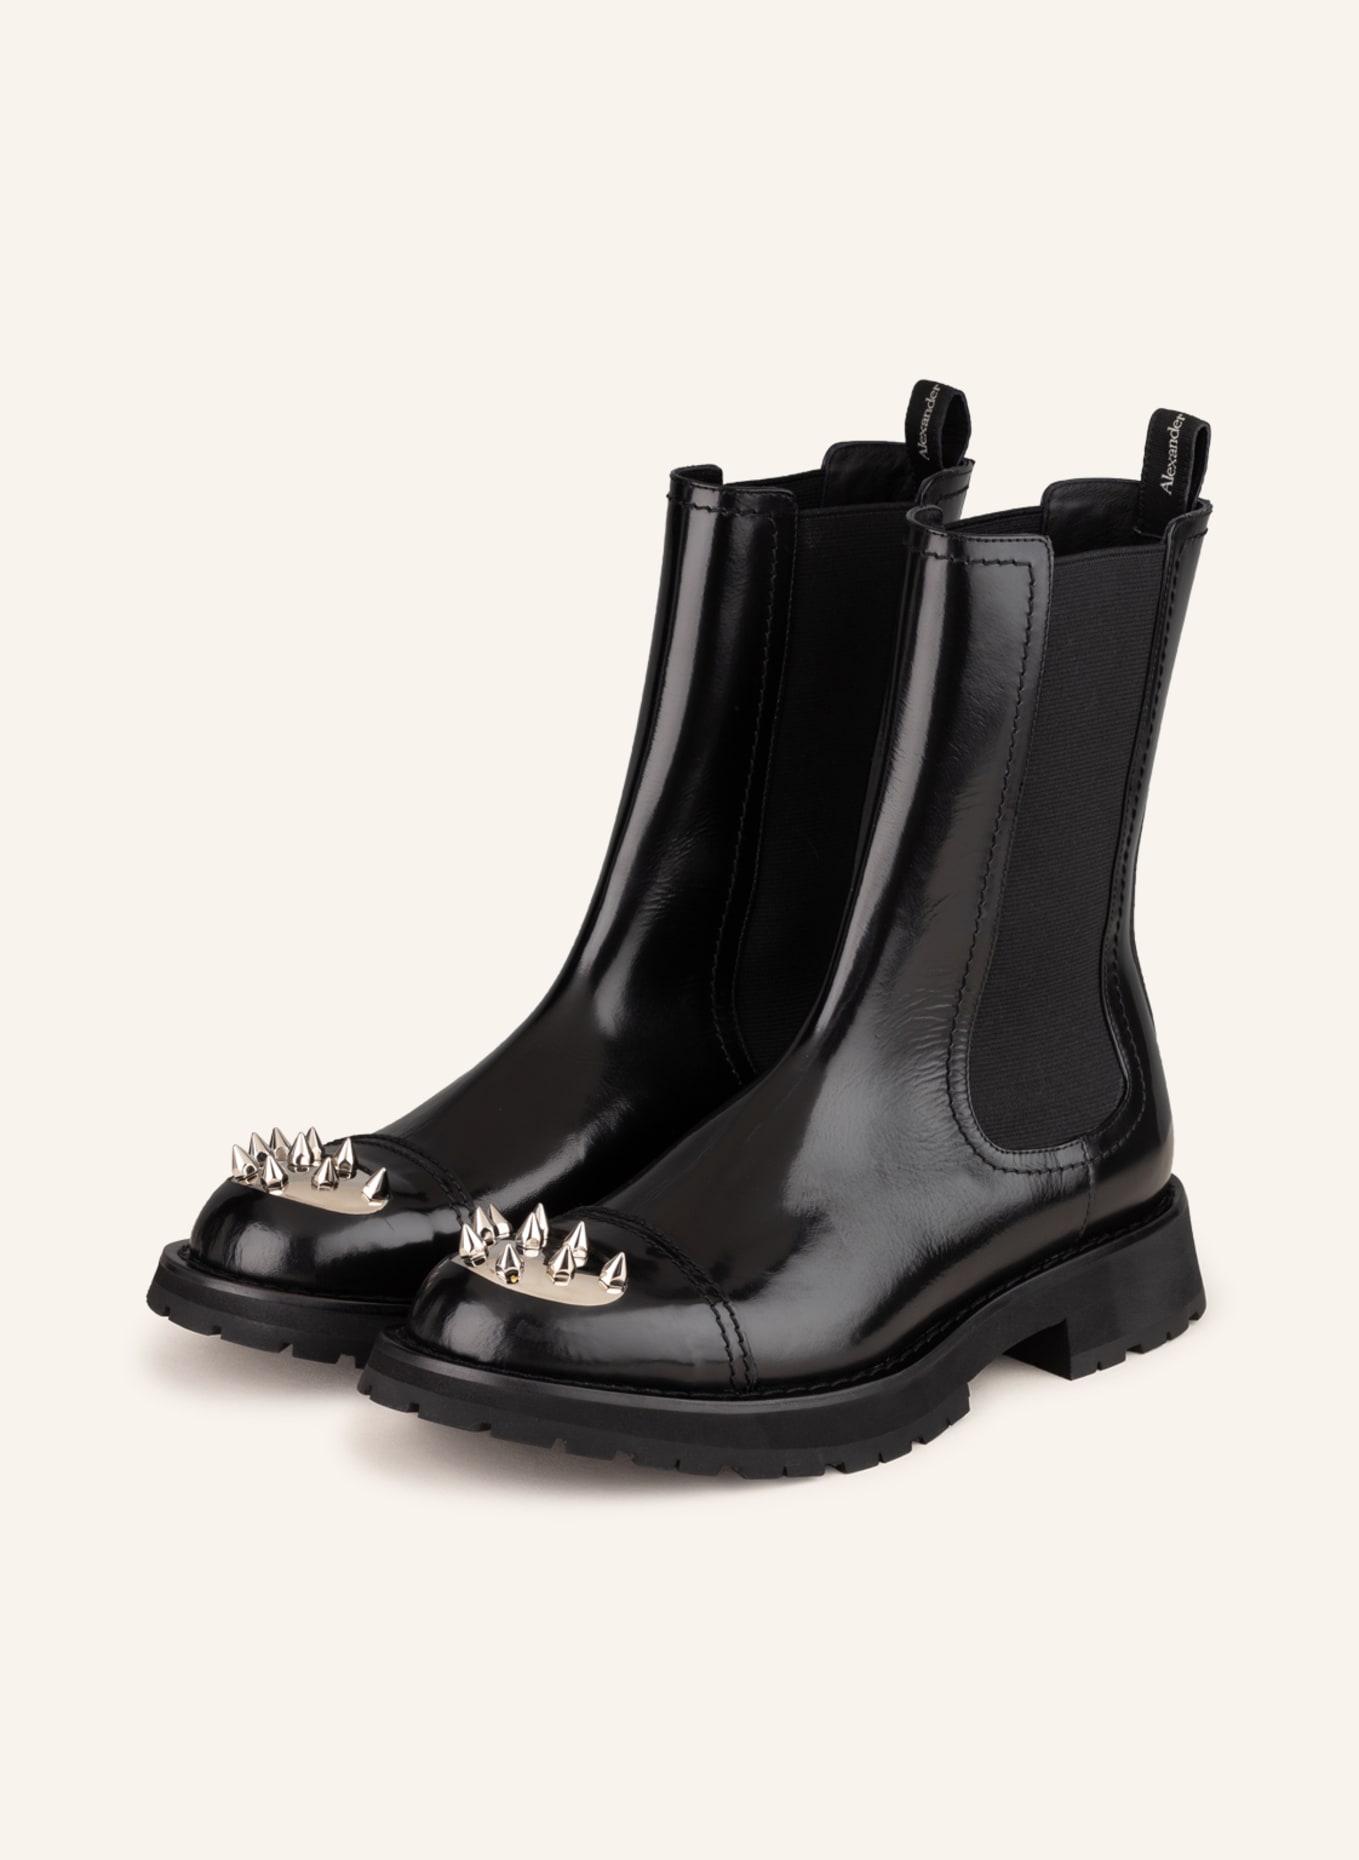 Alexander McQUEEN boots with rivets in black